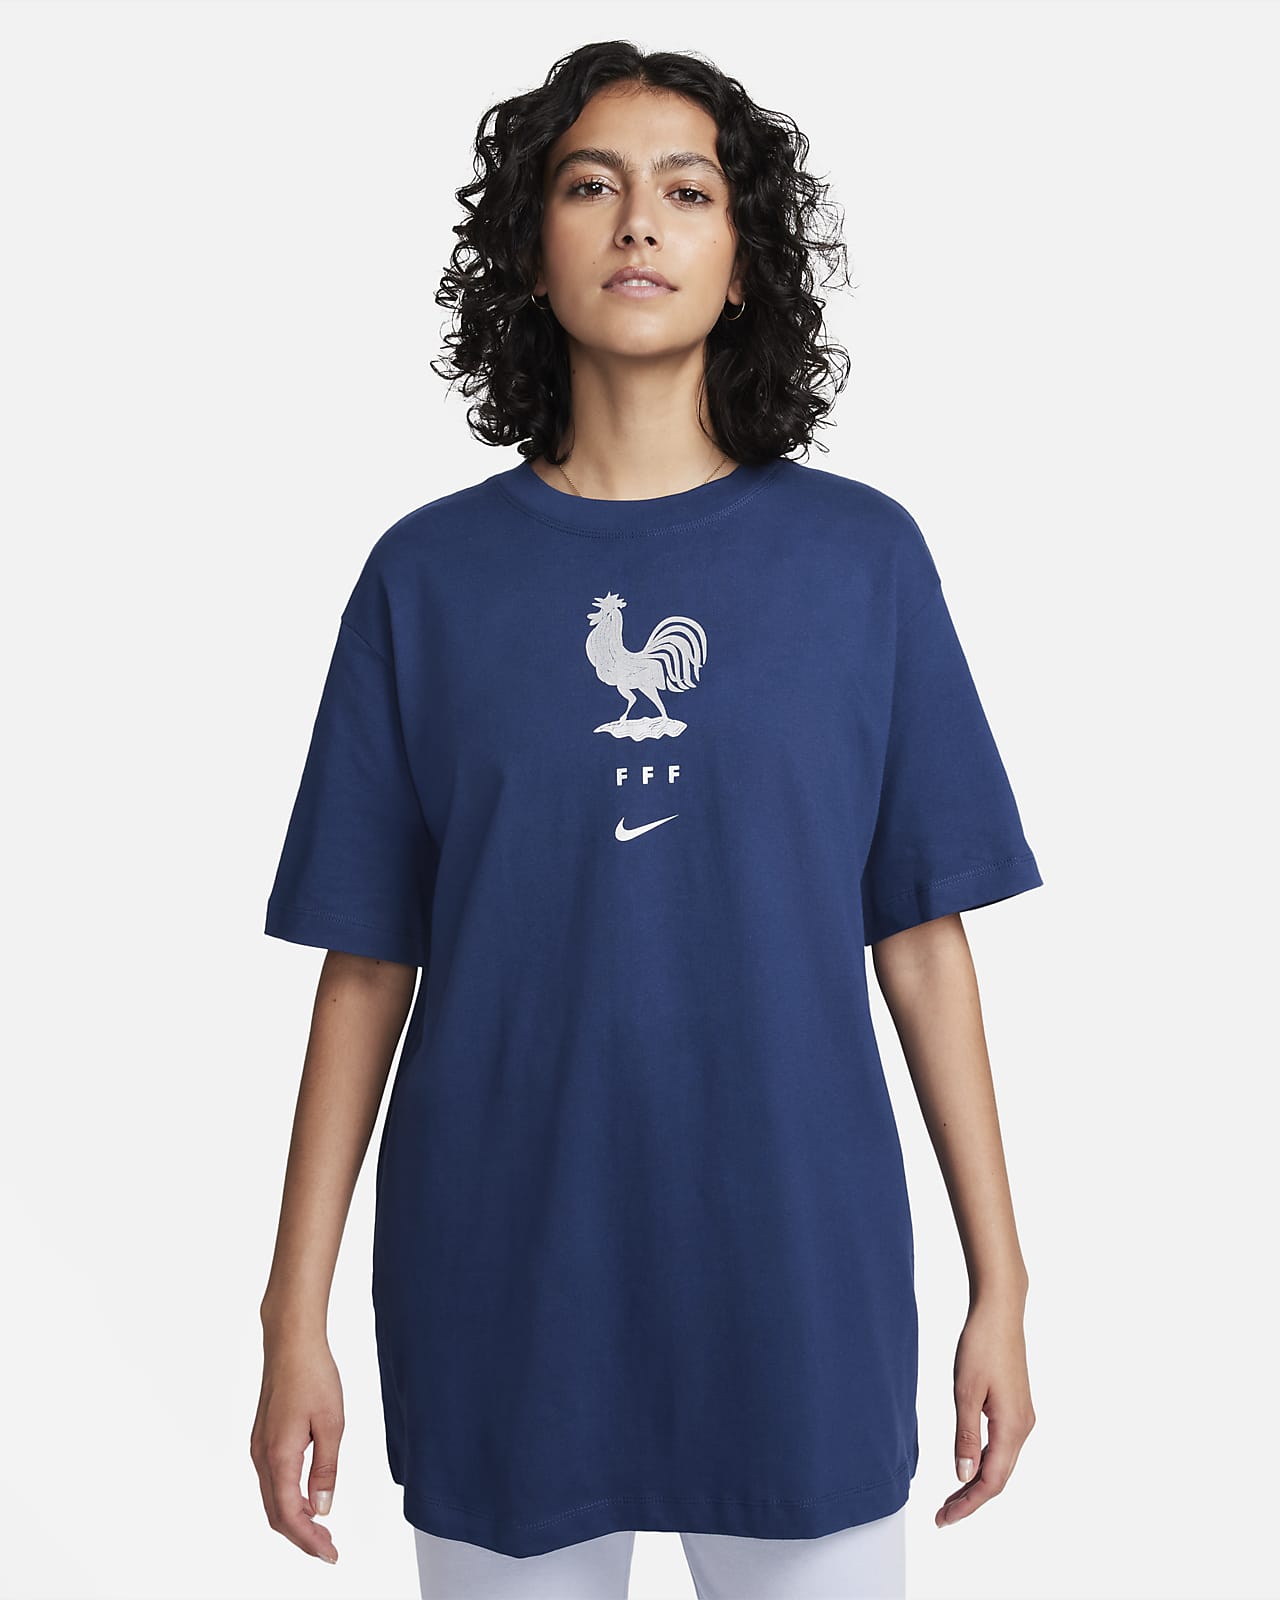 Cokes abortus Kruiden FFF Crest Women's Nike T-Shirt. Nike.com